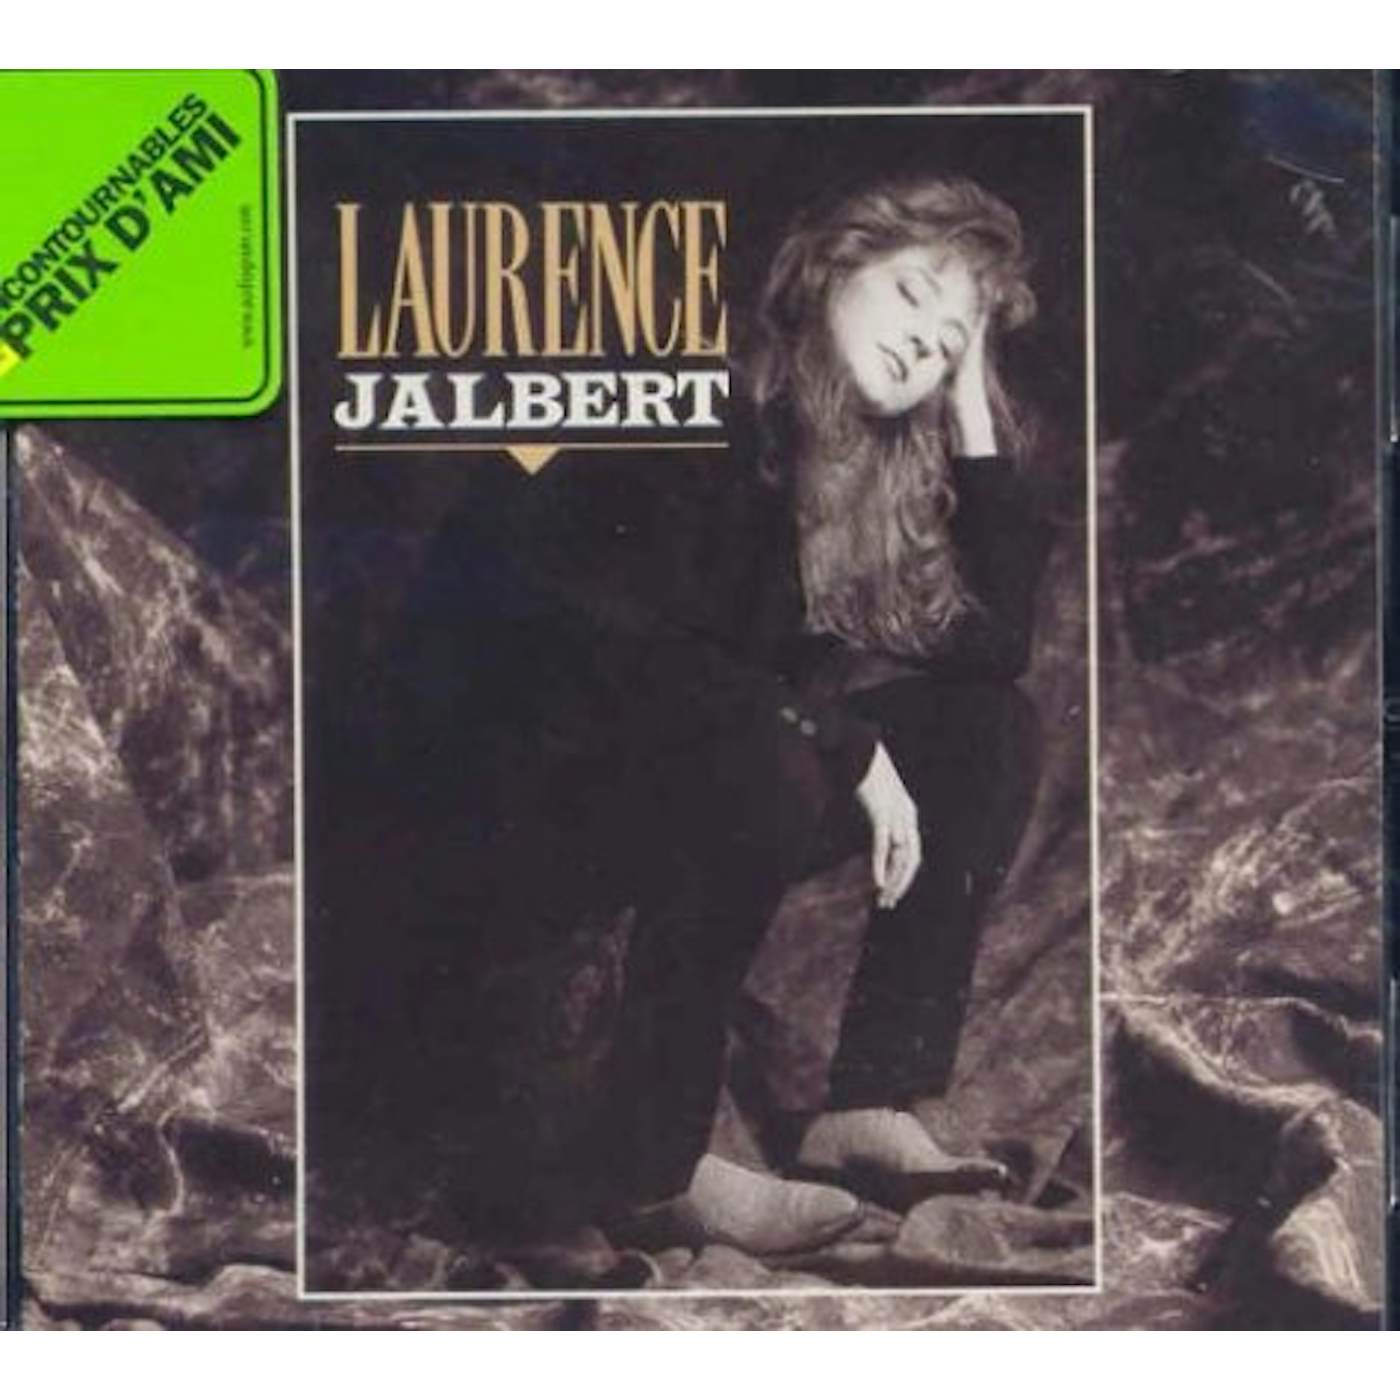 LAURENCE JALBERT CD